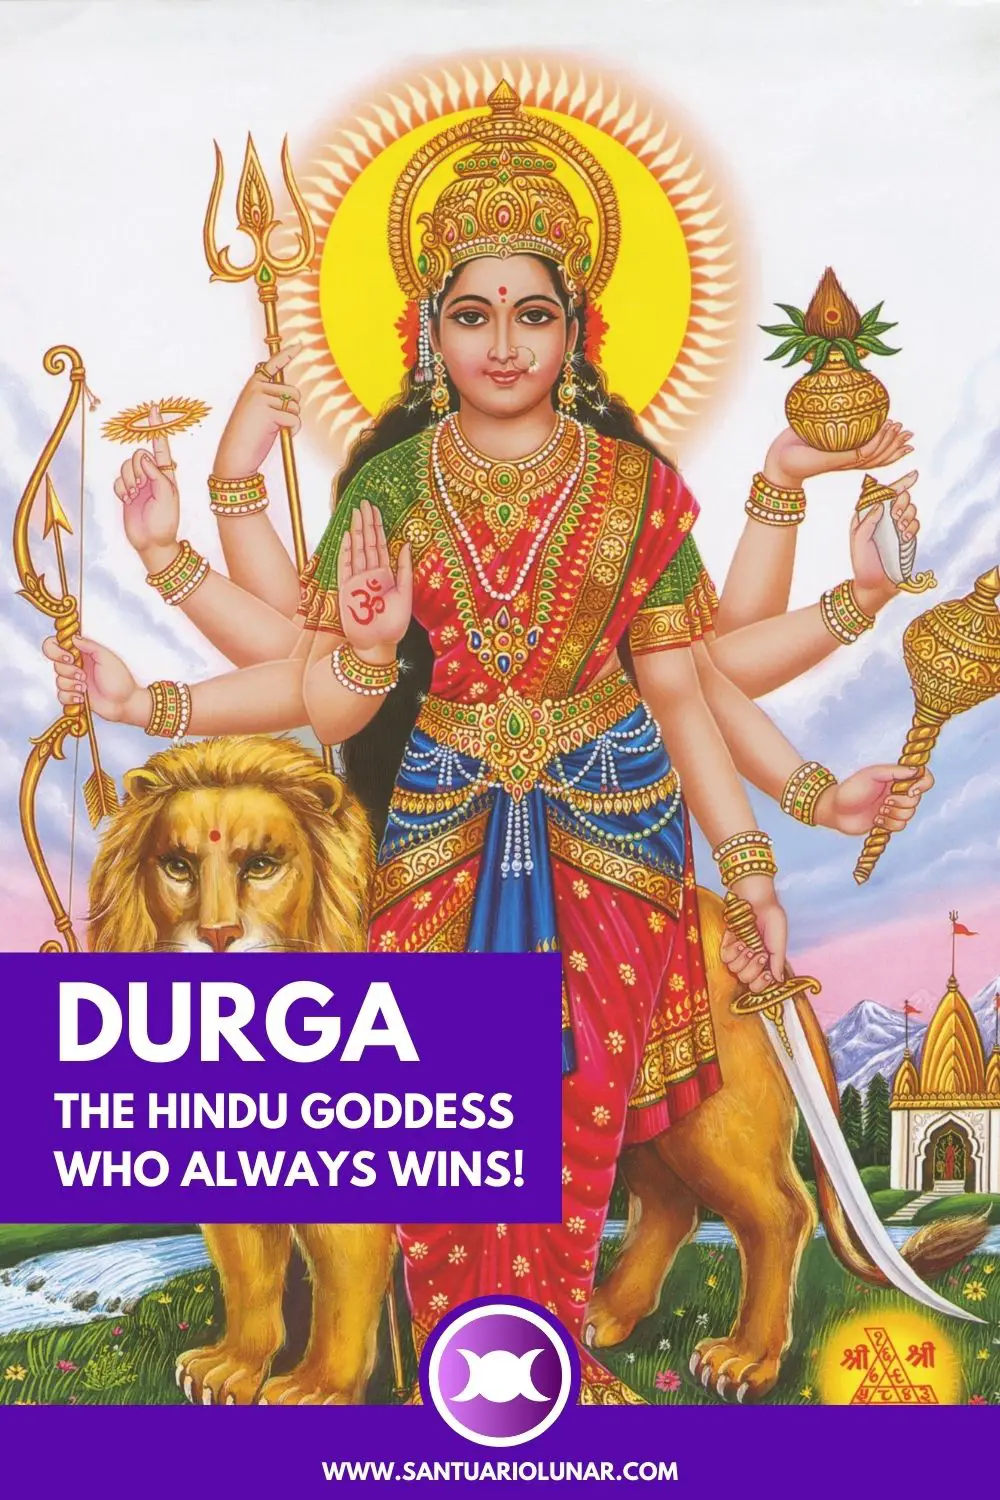 Classic depiction of Durga for Pinterest